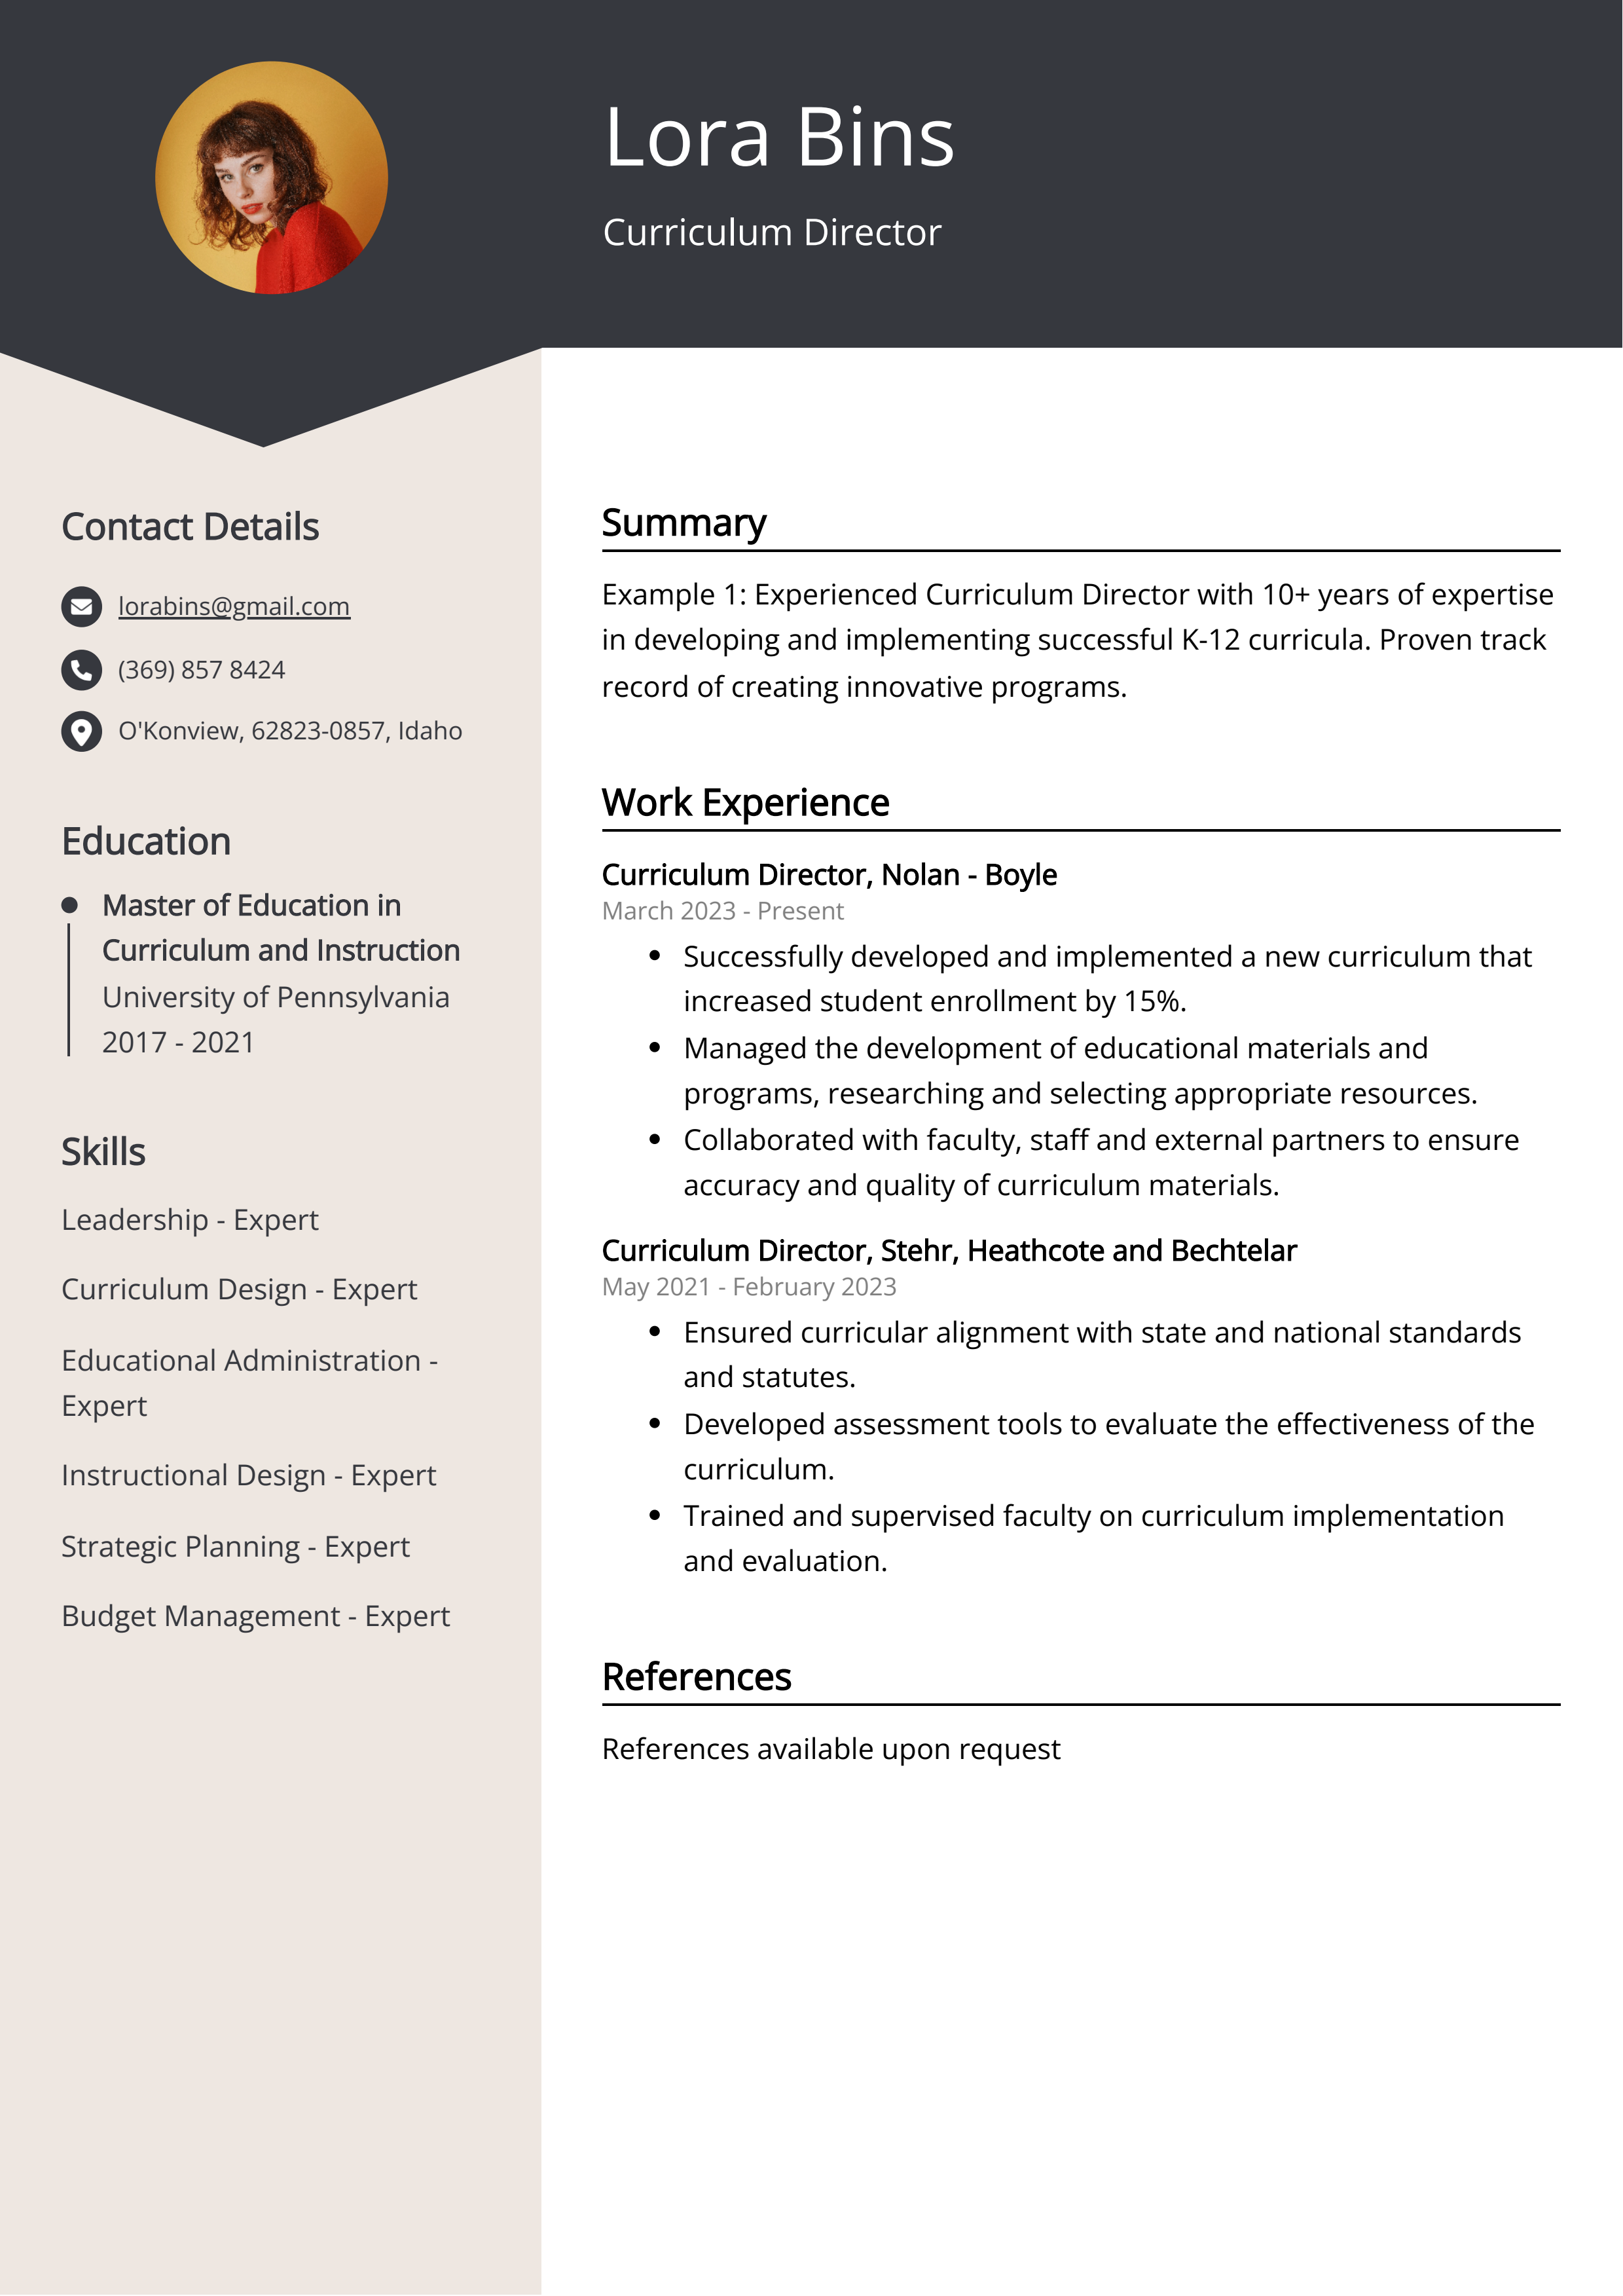 Curriculum Director CV Example